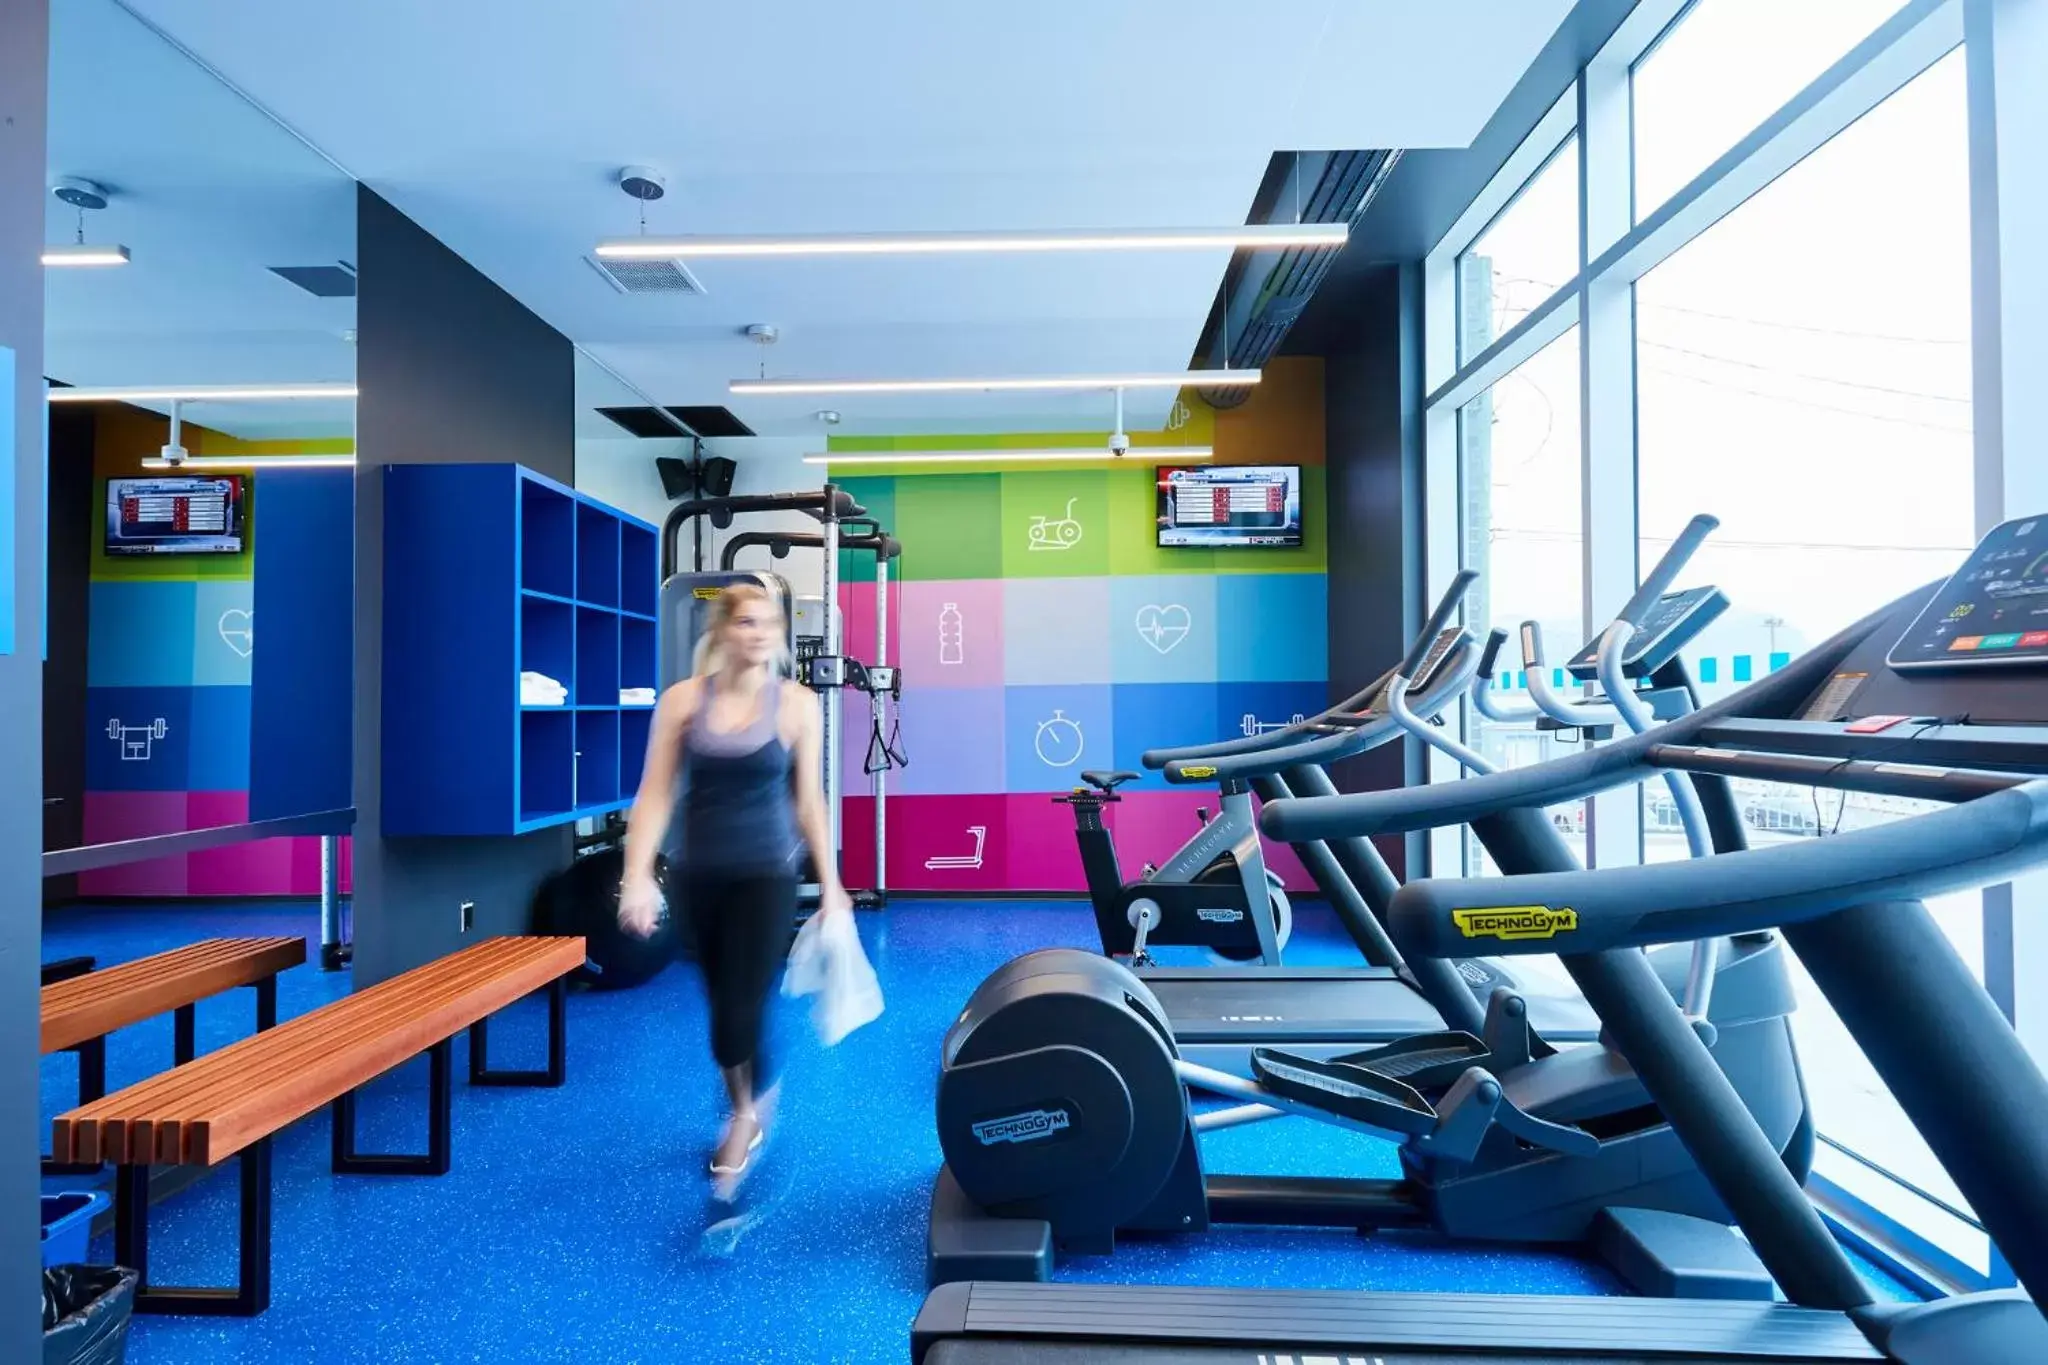 Fitness centre/facilities, Fitness Center/Facilities in Alt Hotel St. John's